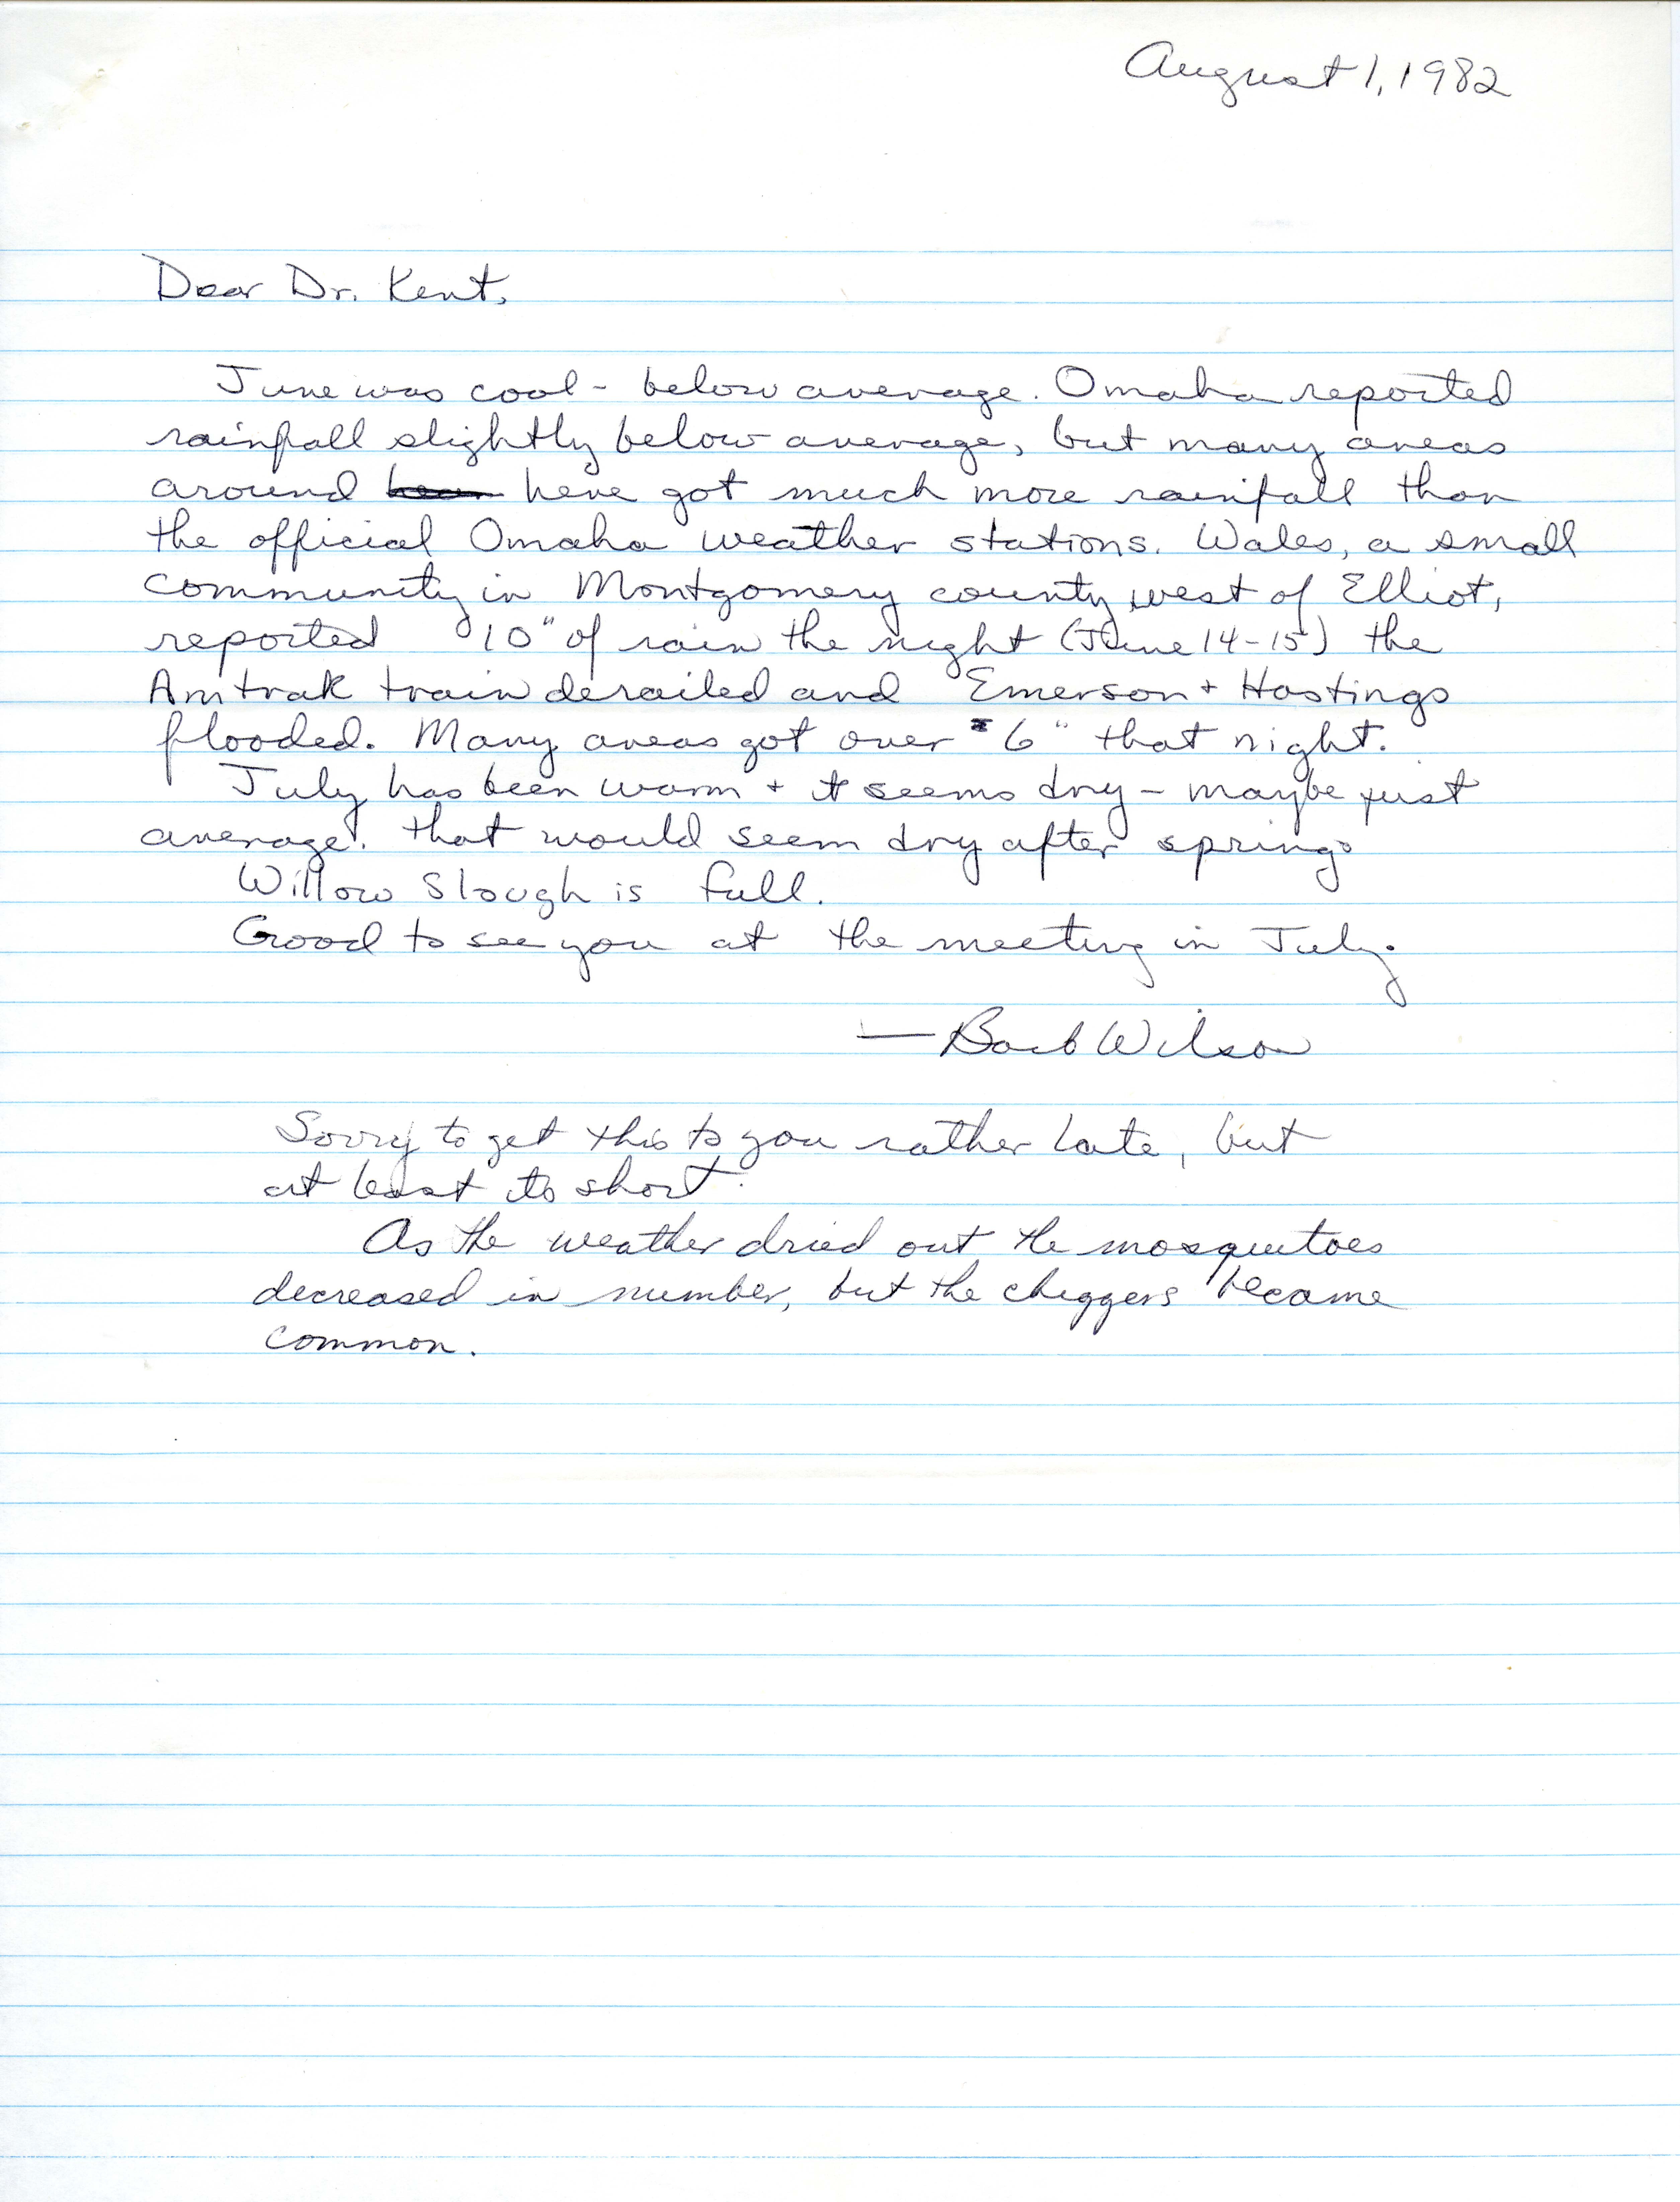 Barbara L. Wilson letter to Thomas H. Kent regarding bird breeding report, August 1, 1982